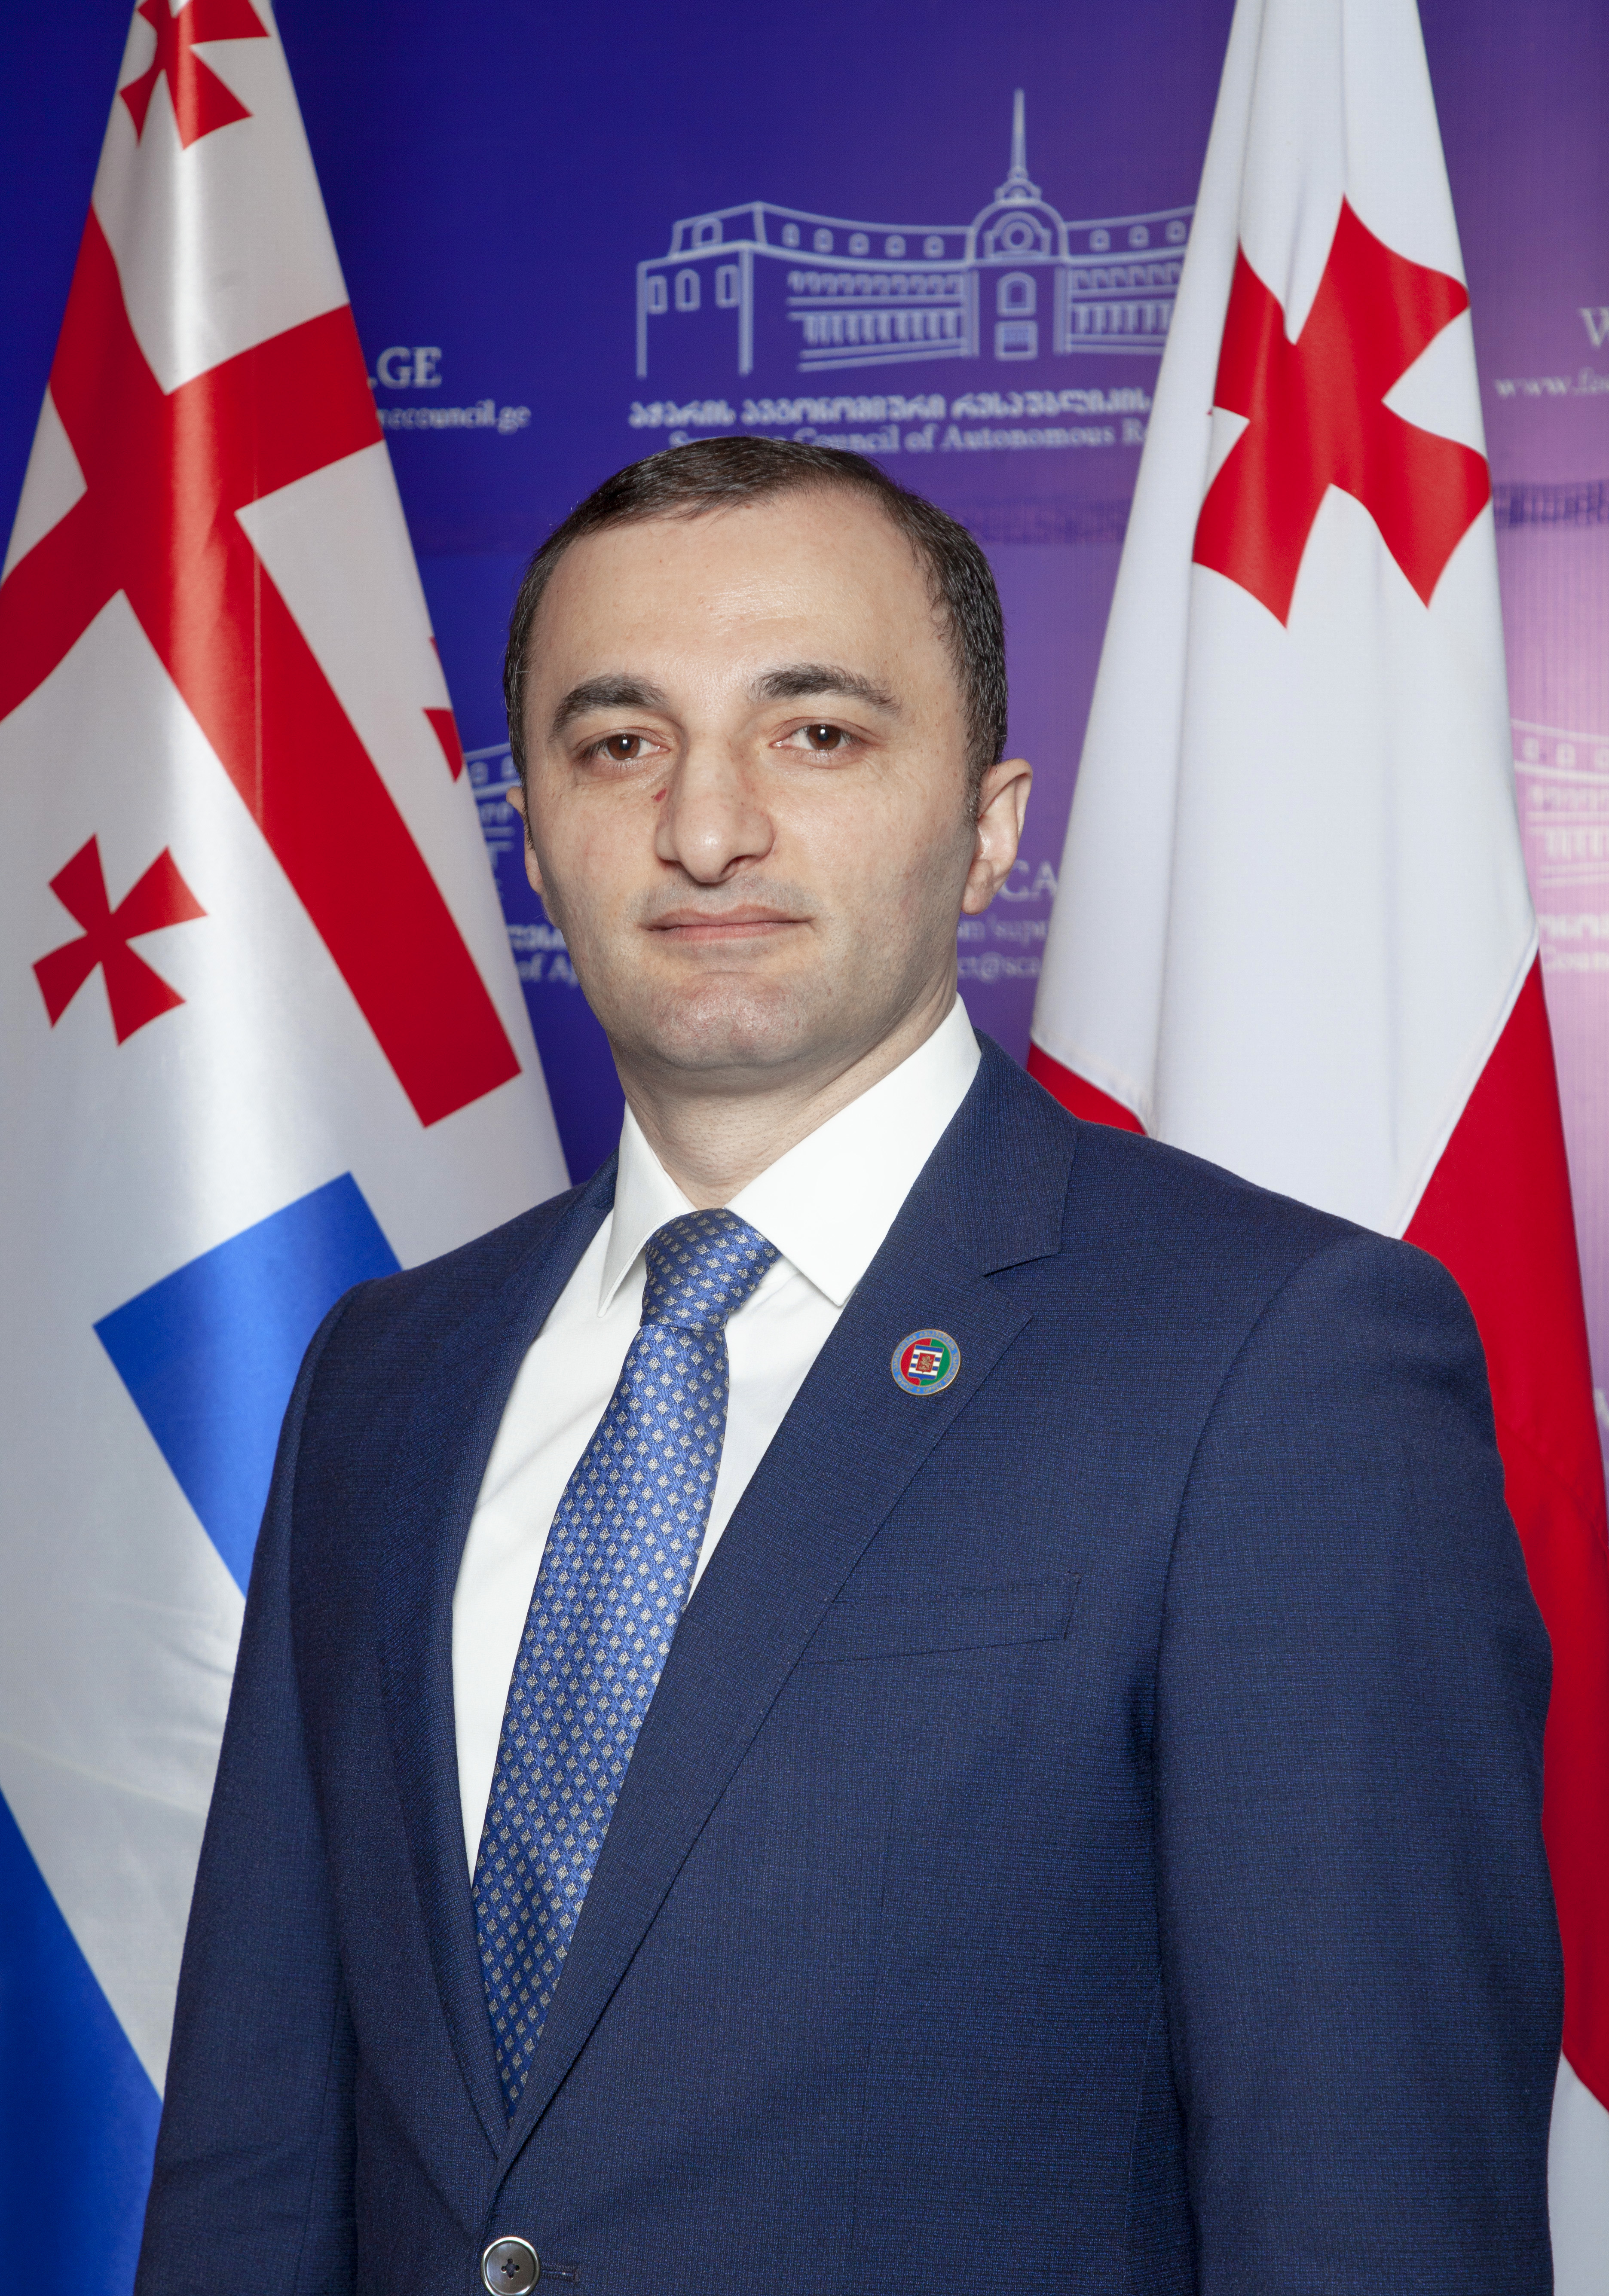 Davit Gabaidze